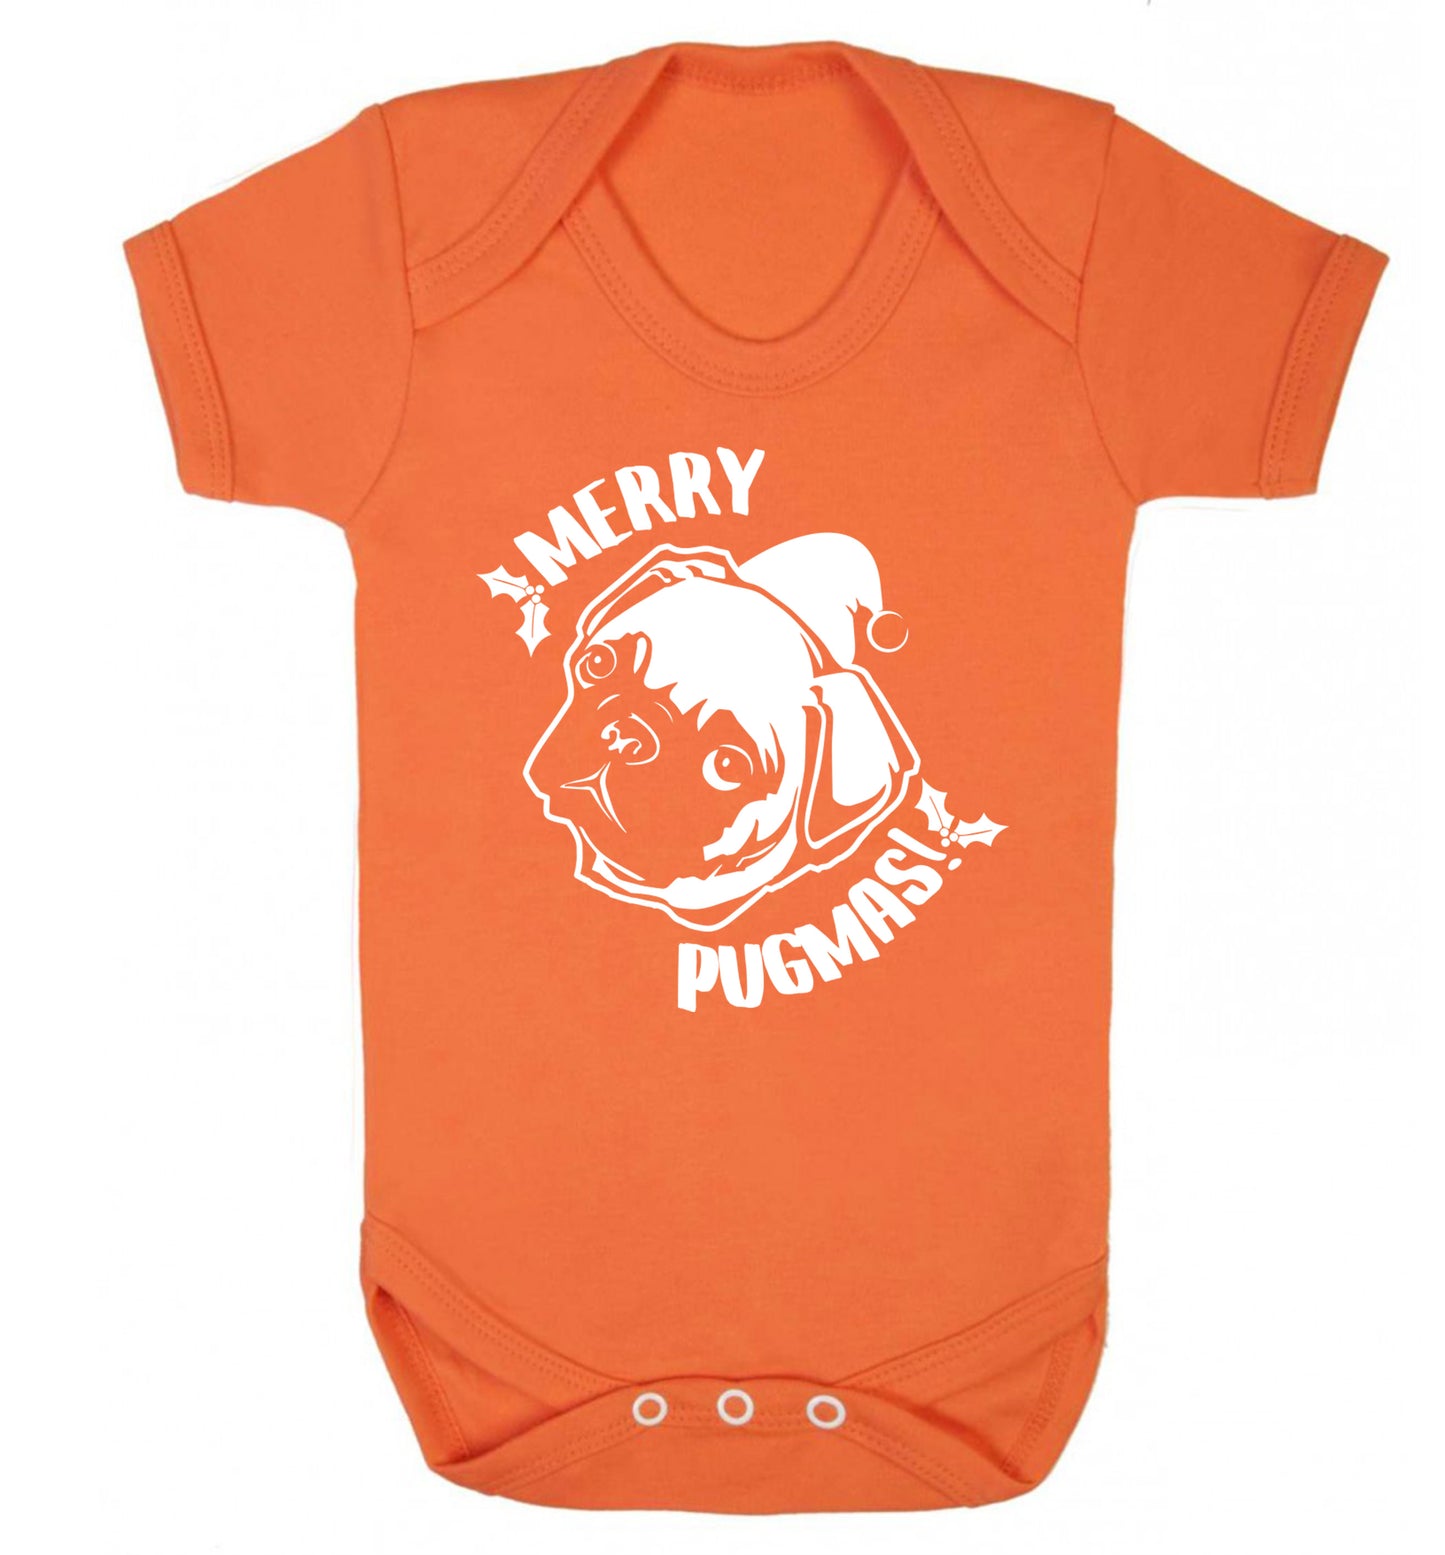 Merry Pugmas Baby Vest orange 18-24 months